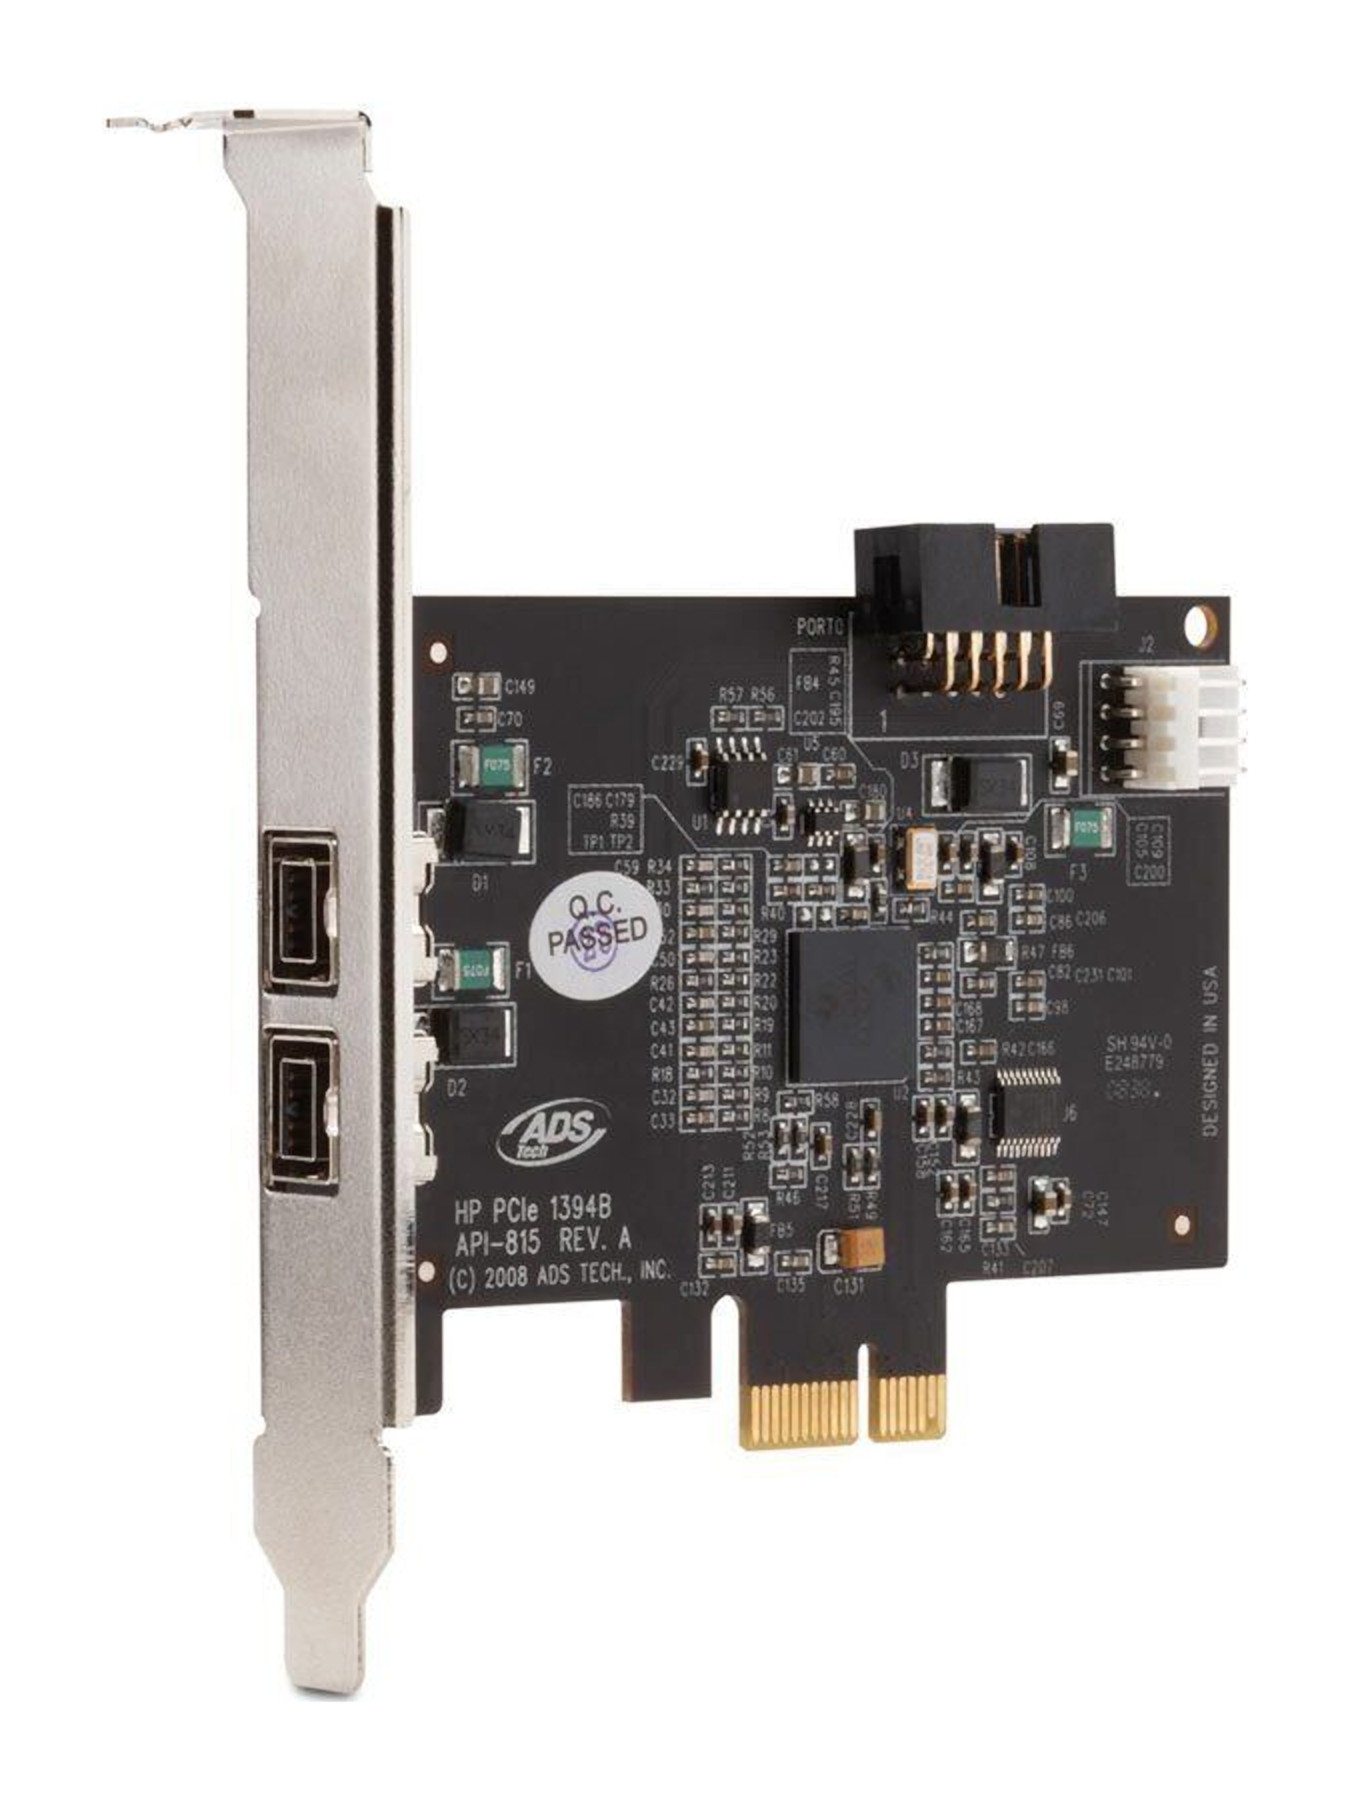 HP API-815 1394b Dual Port FireWire PCI-E Interface Card 491886-001 508927-001 - Click Image to Close